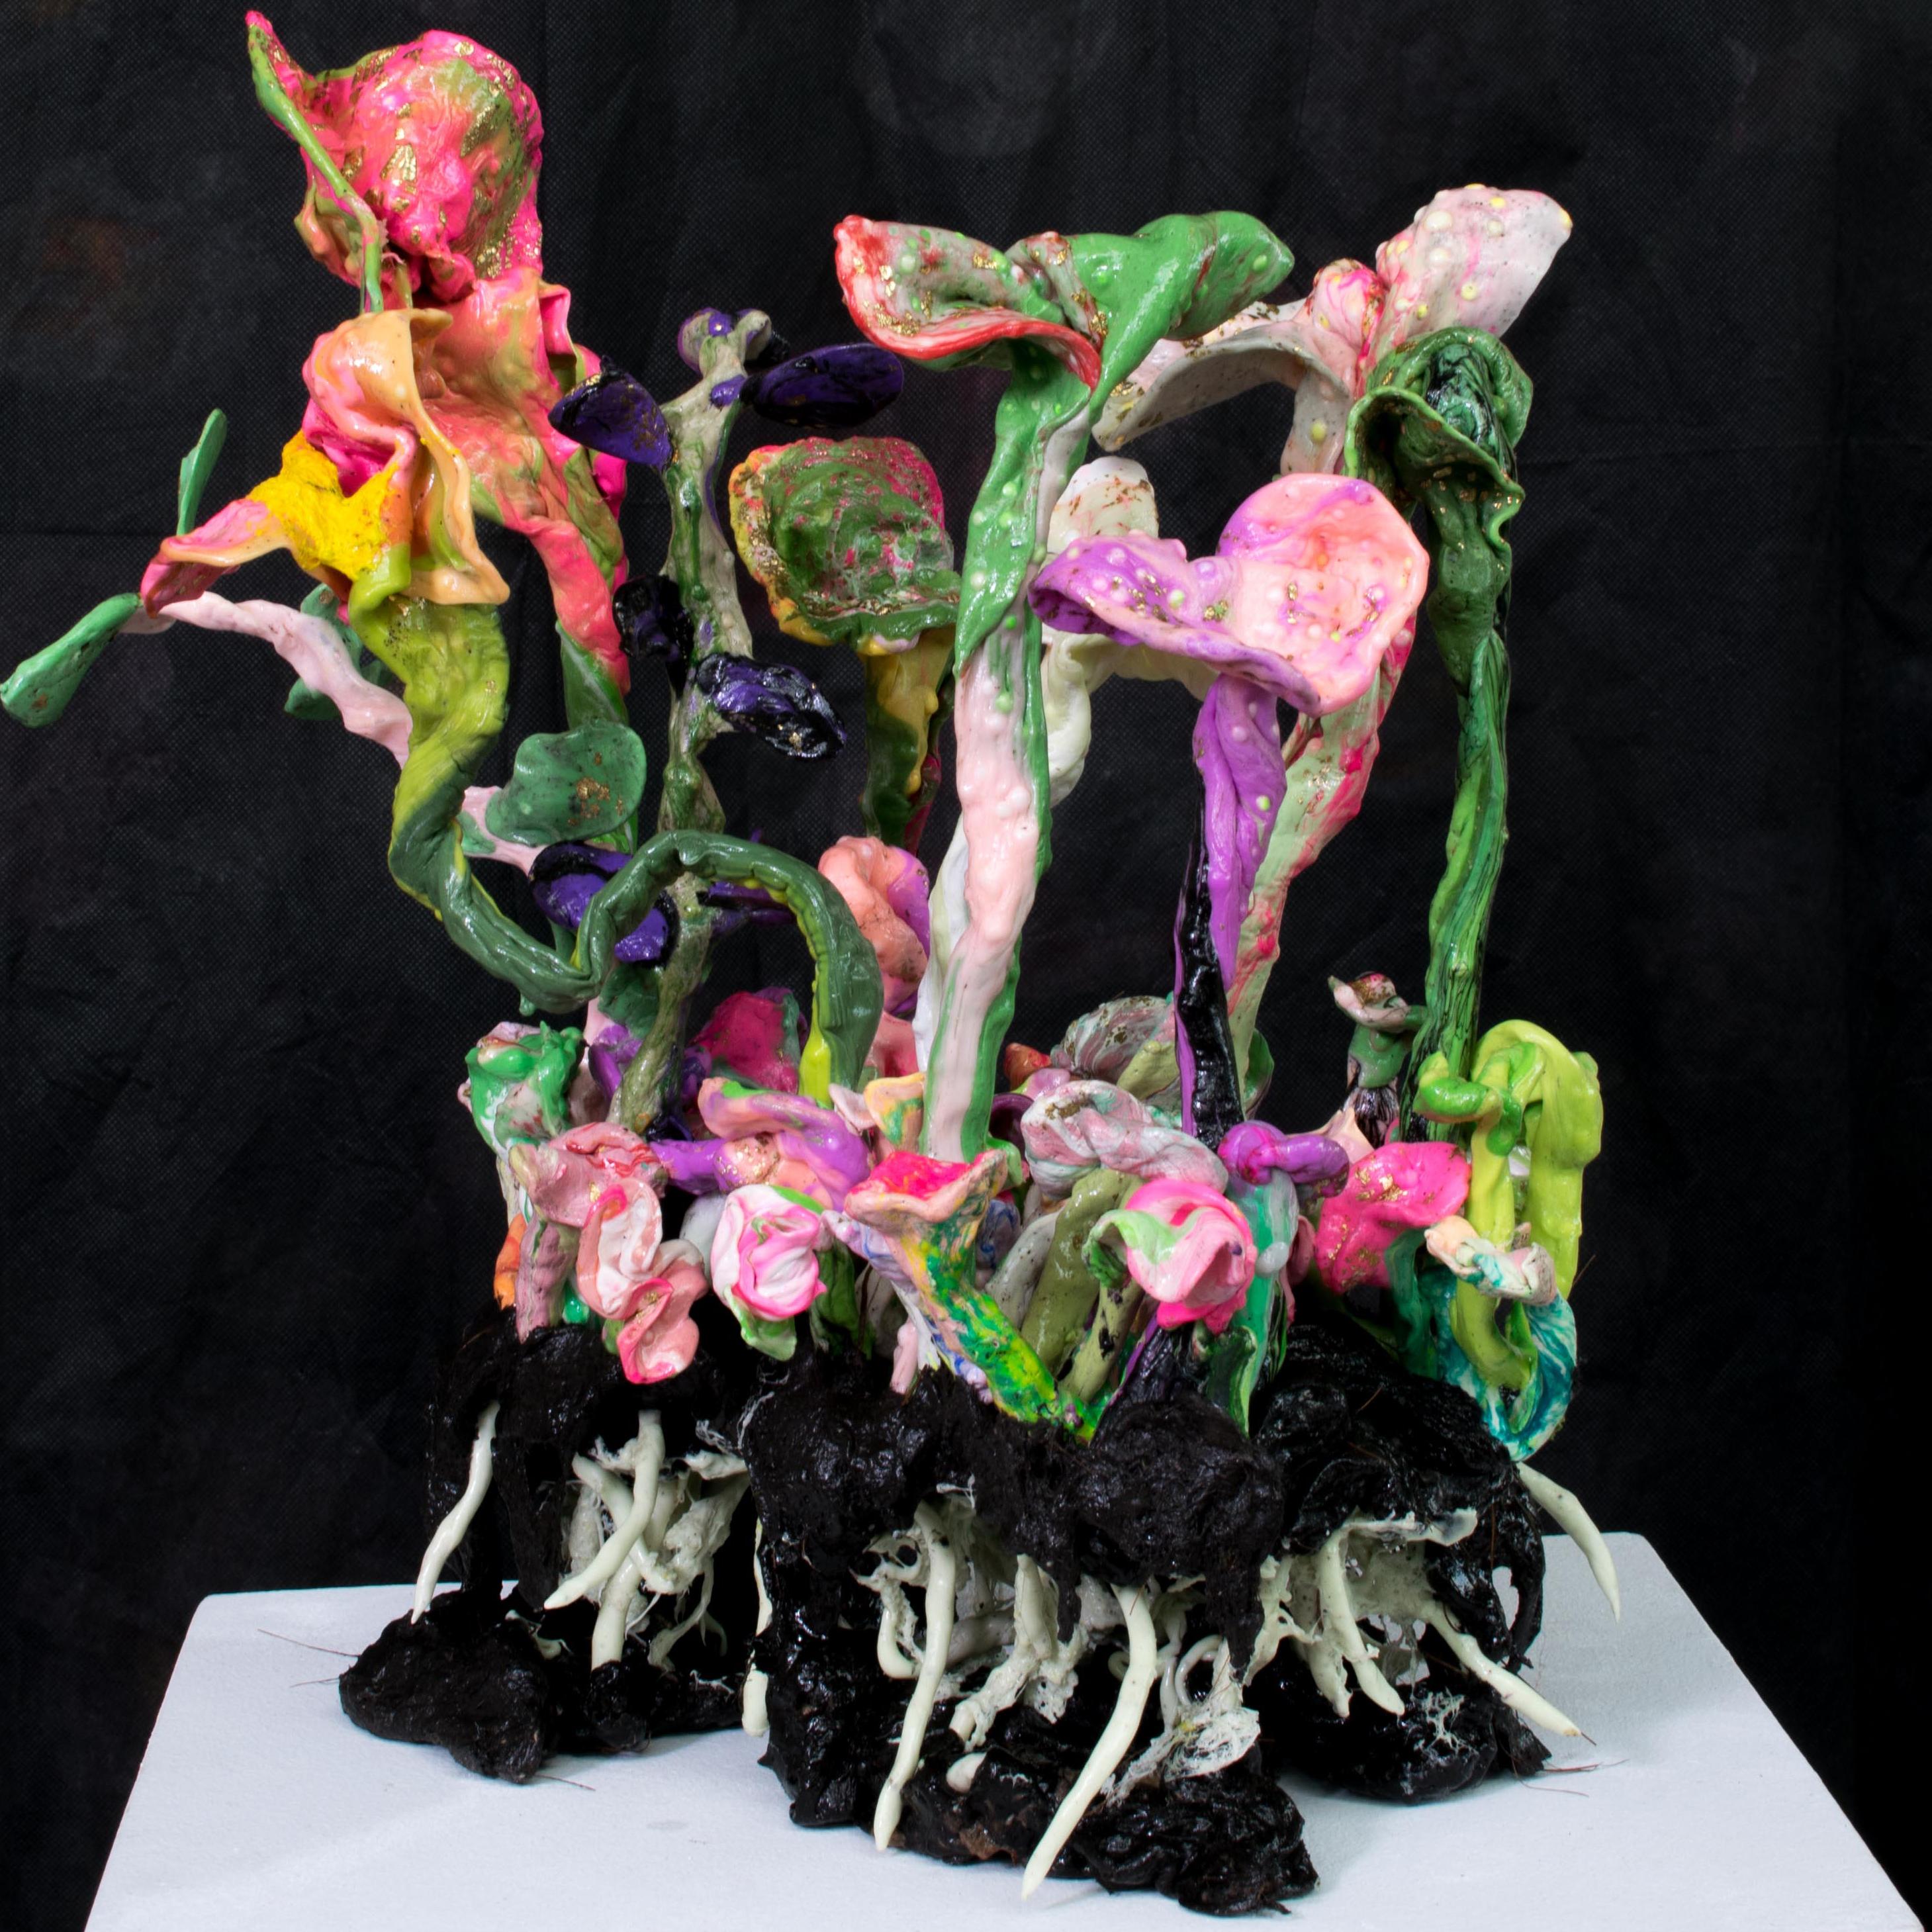 Stranger Flowers - II - Contemporary Mixed Media Art by Stefan Gross